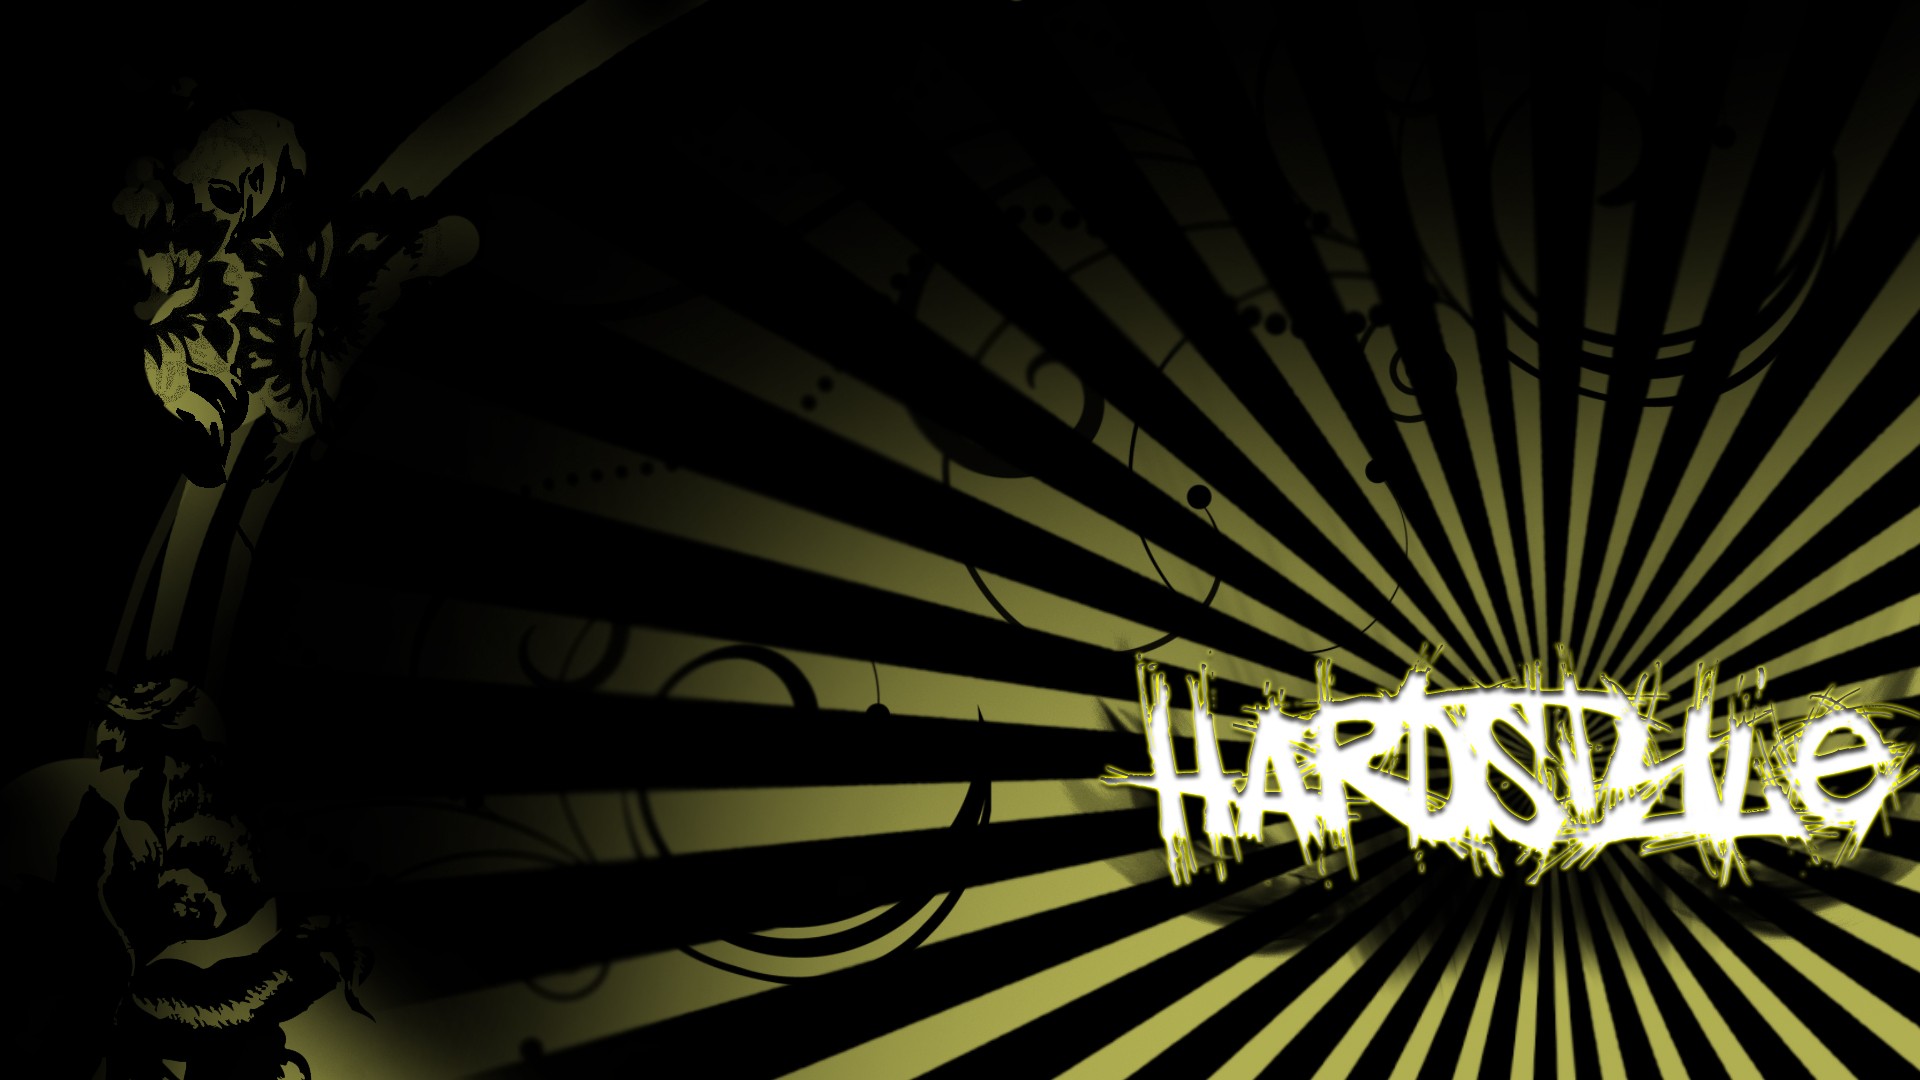 Hardstyle Music Typography Digital Art 1920x1080